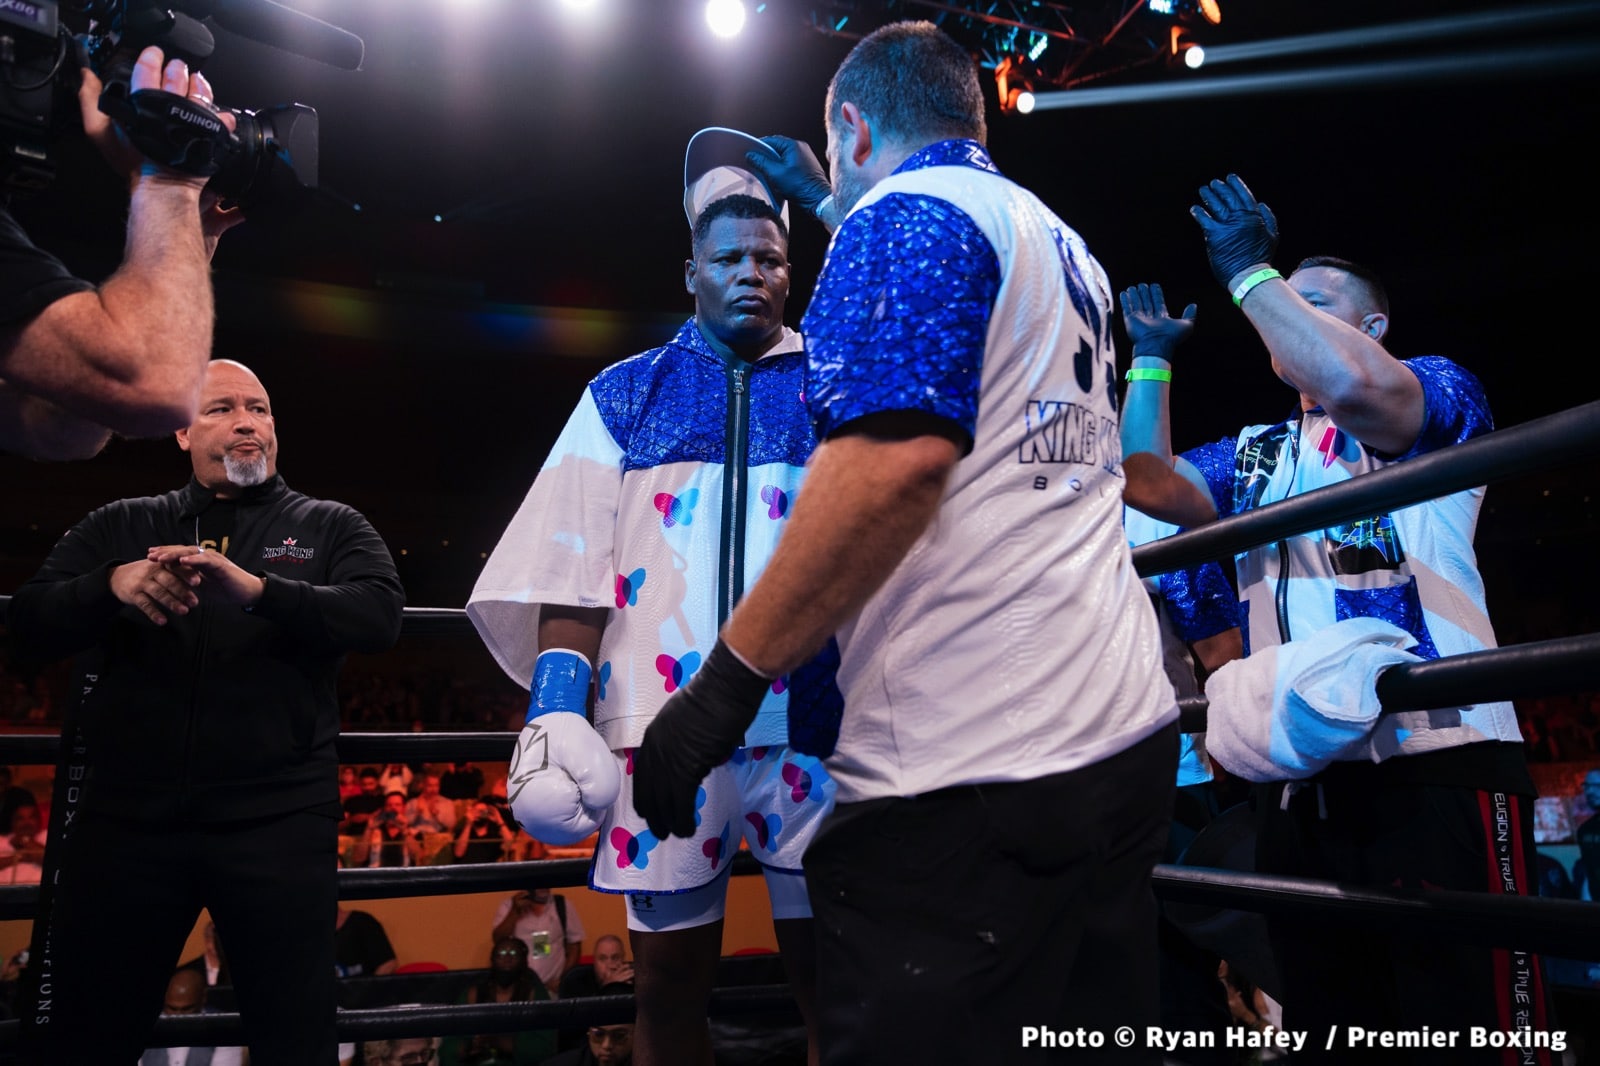 Andy Ruiz Jr, Luis Ortiz, Tyrone Spong boxing image / photo